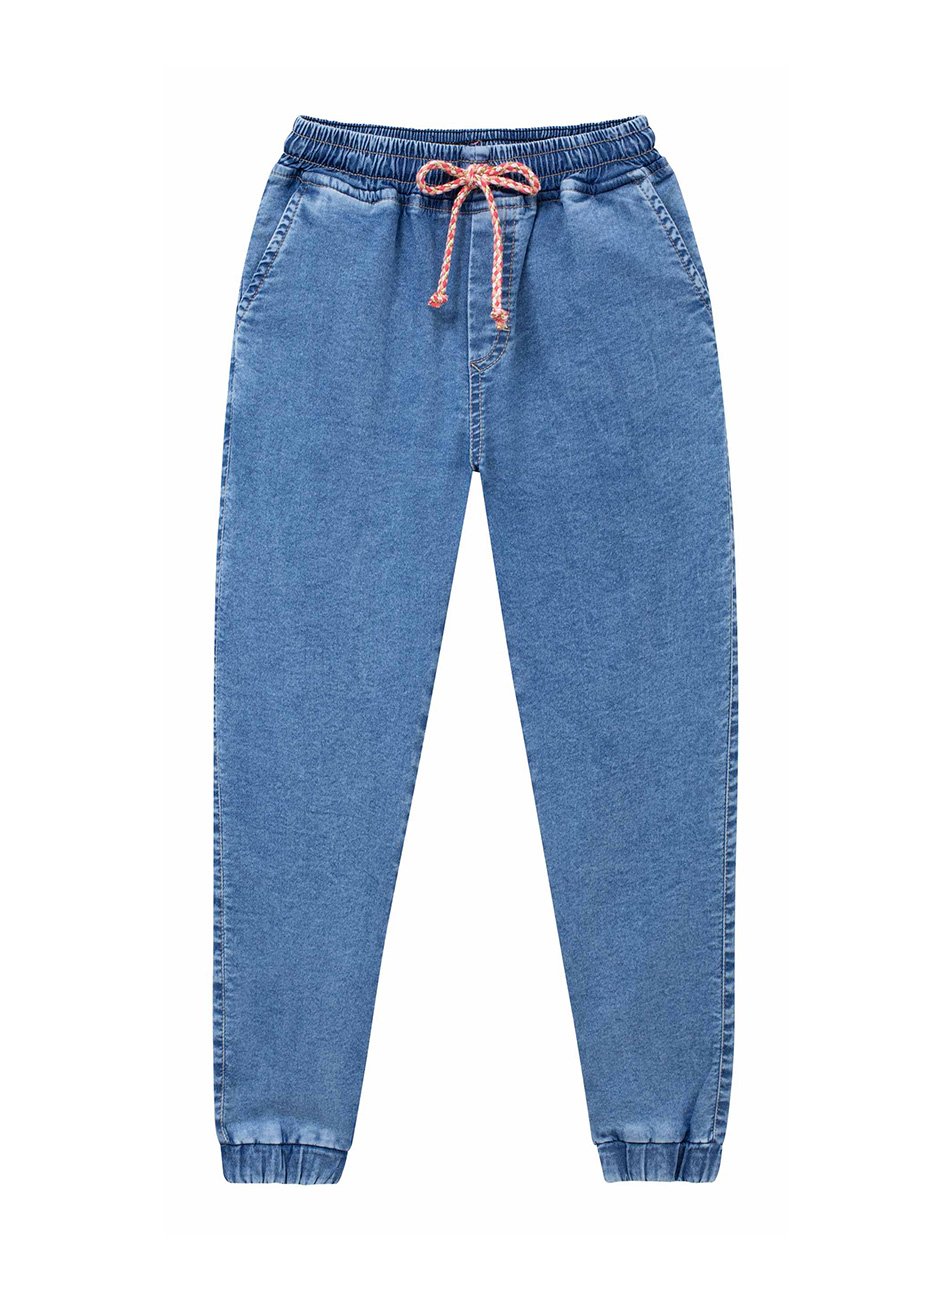 Calça Jogger Jeans Infantil Menina - Bakulele Azul